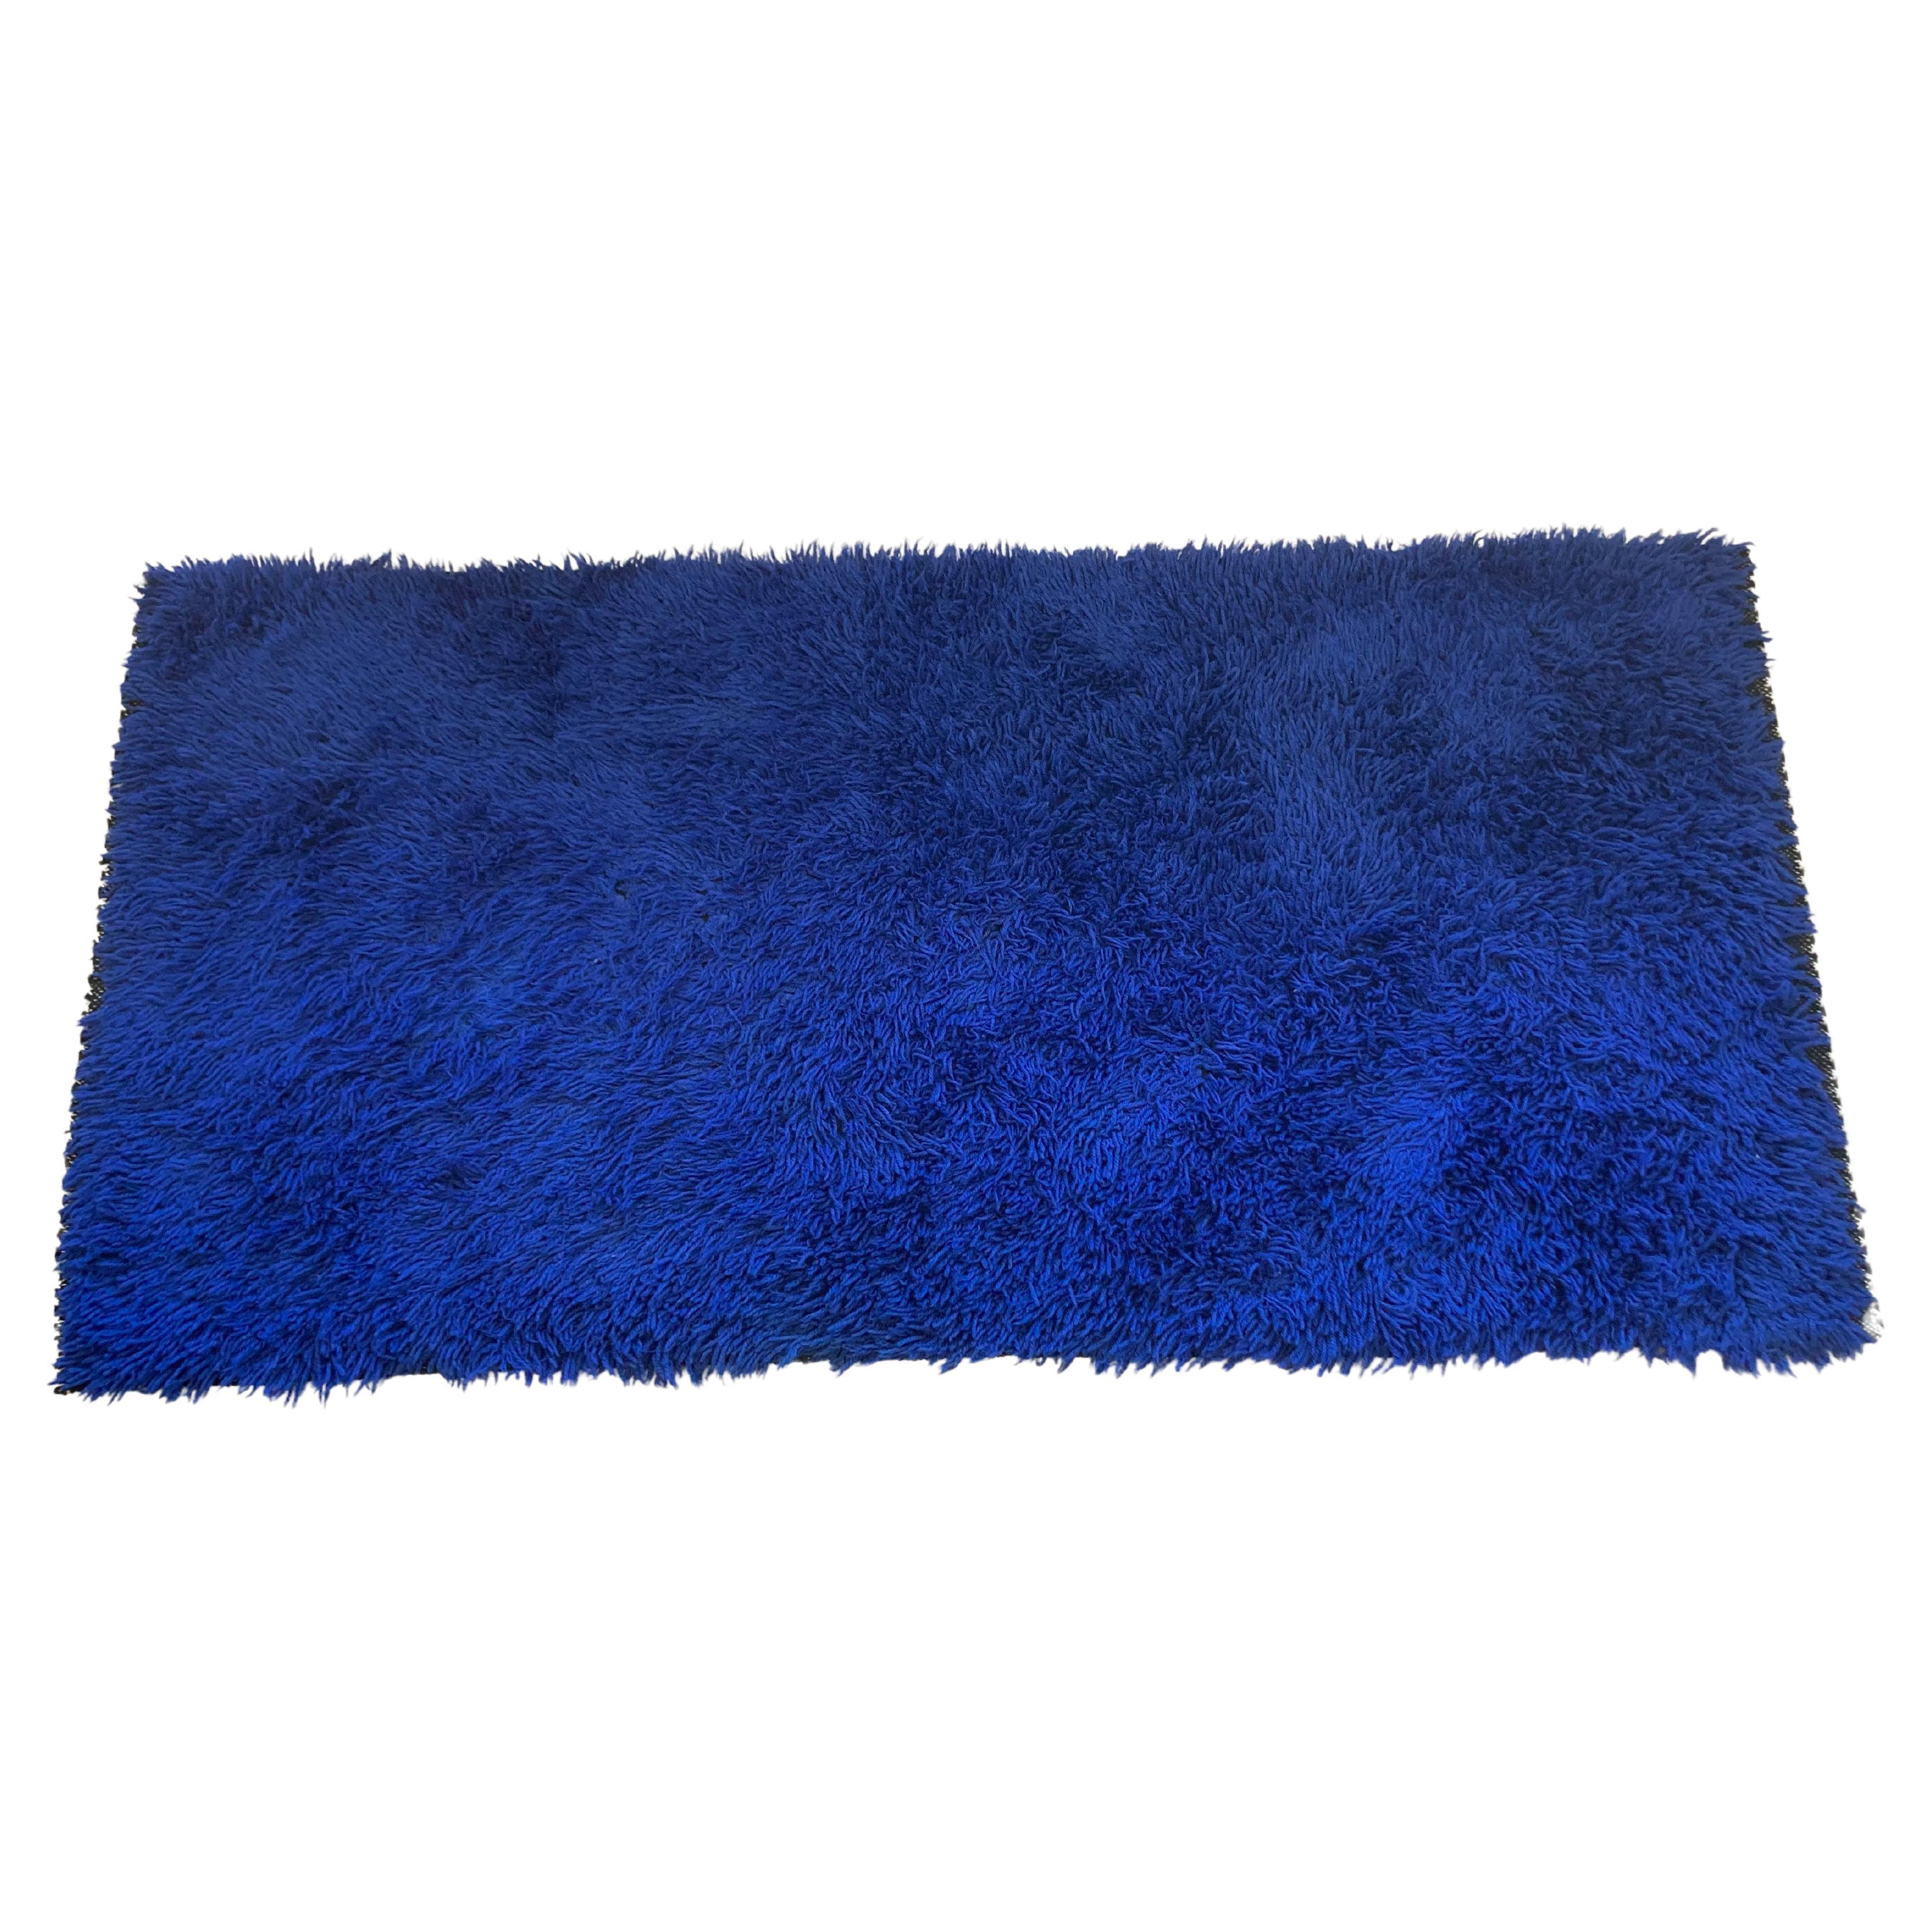 Pair of Blue Wool Midcentury Design Carpets, Denmark, 1970s For Sale